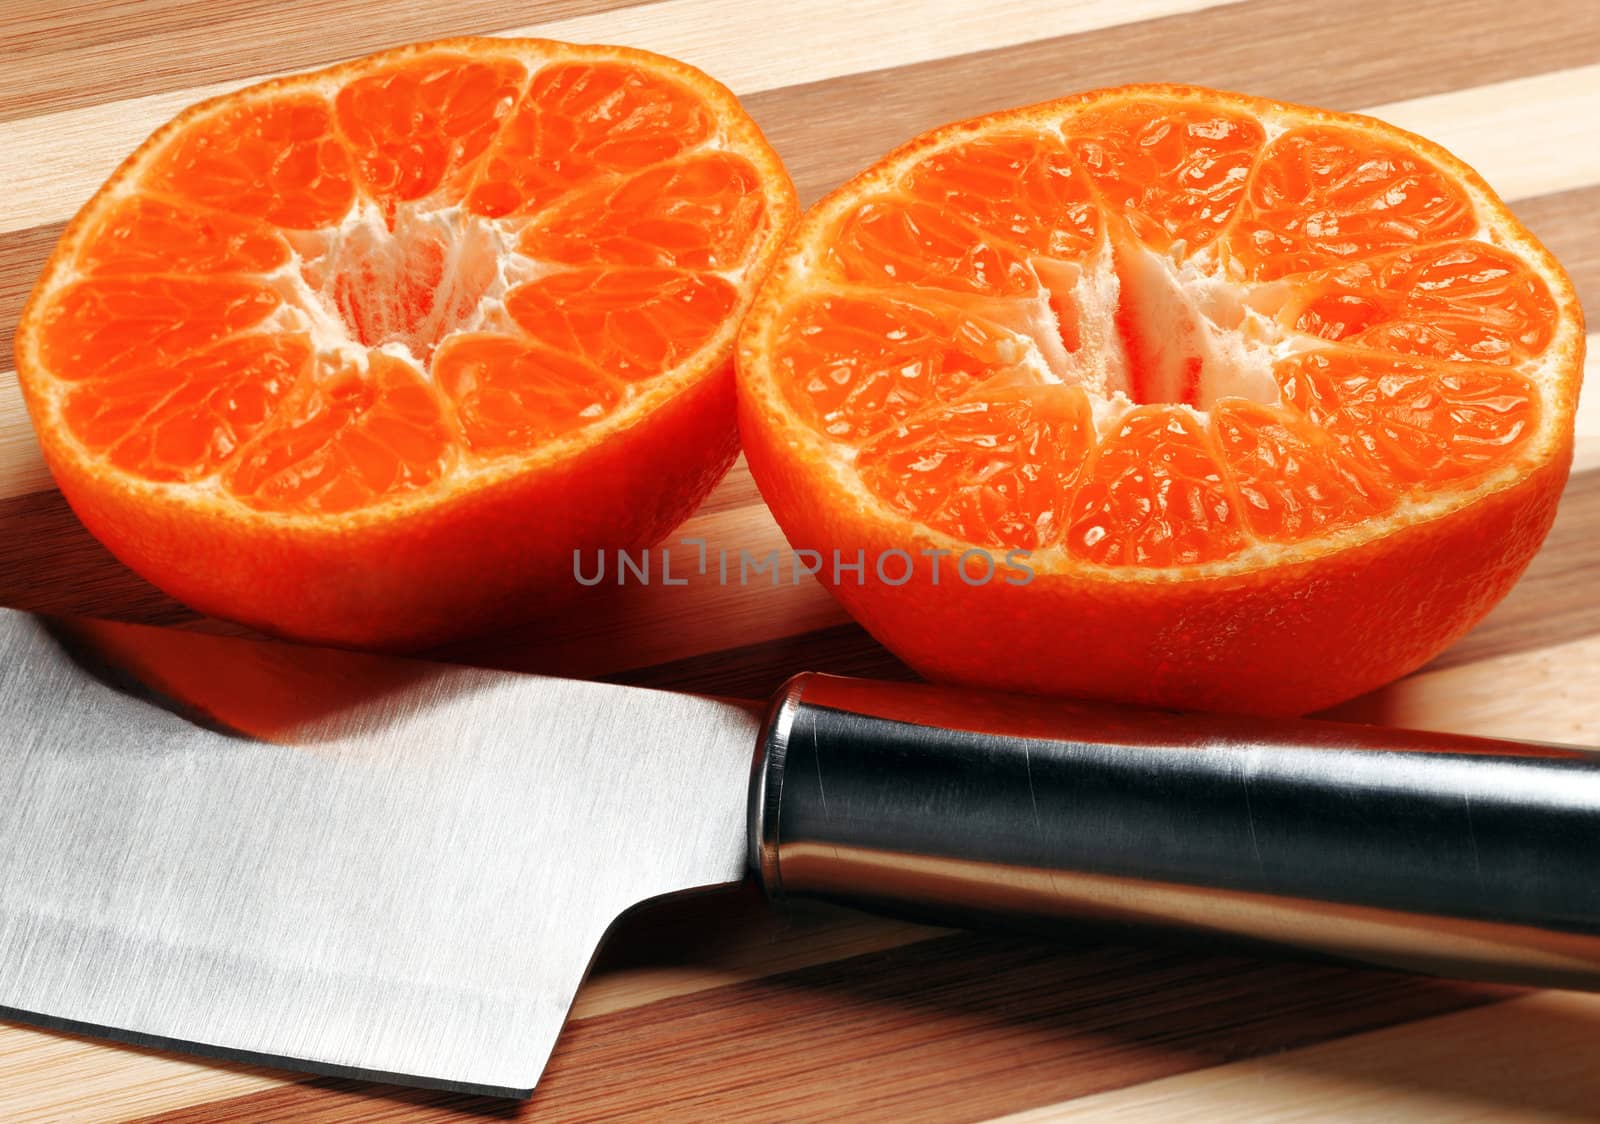 orange mandarin tangerine on cutting board with stainless steel knife